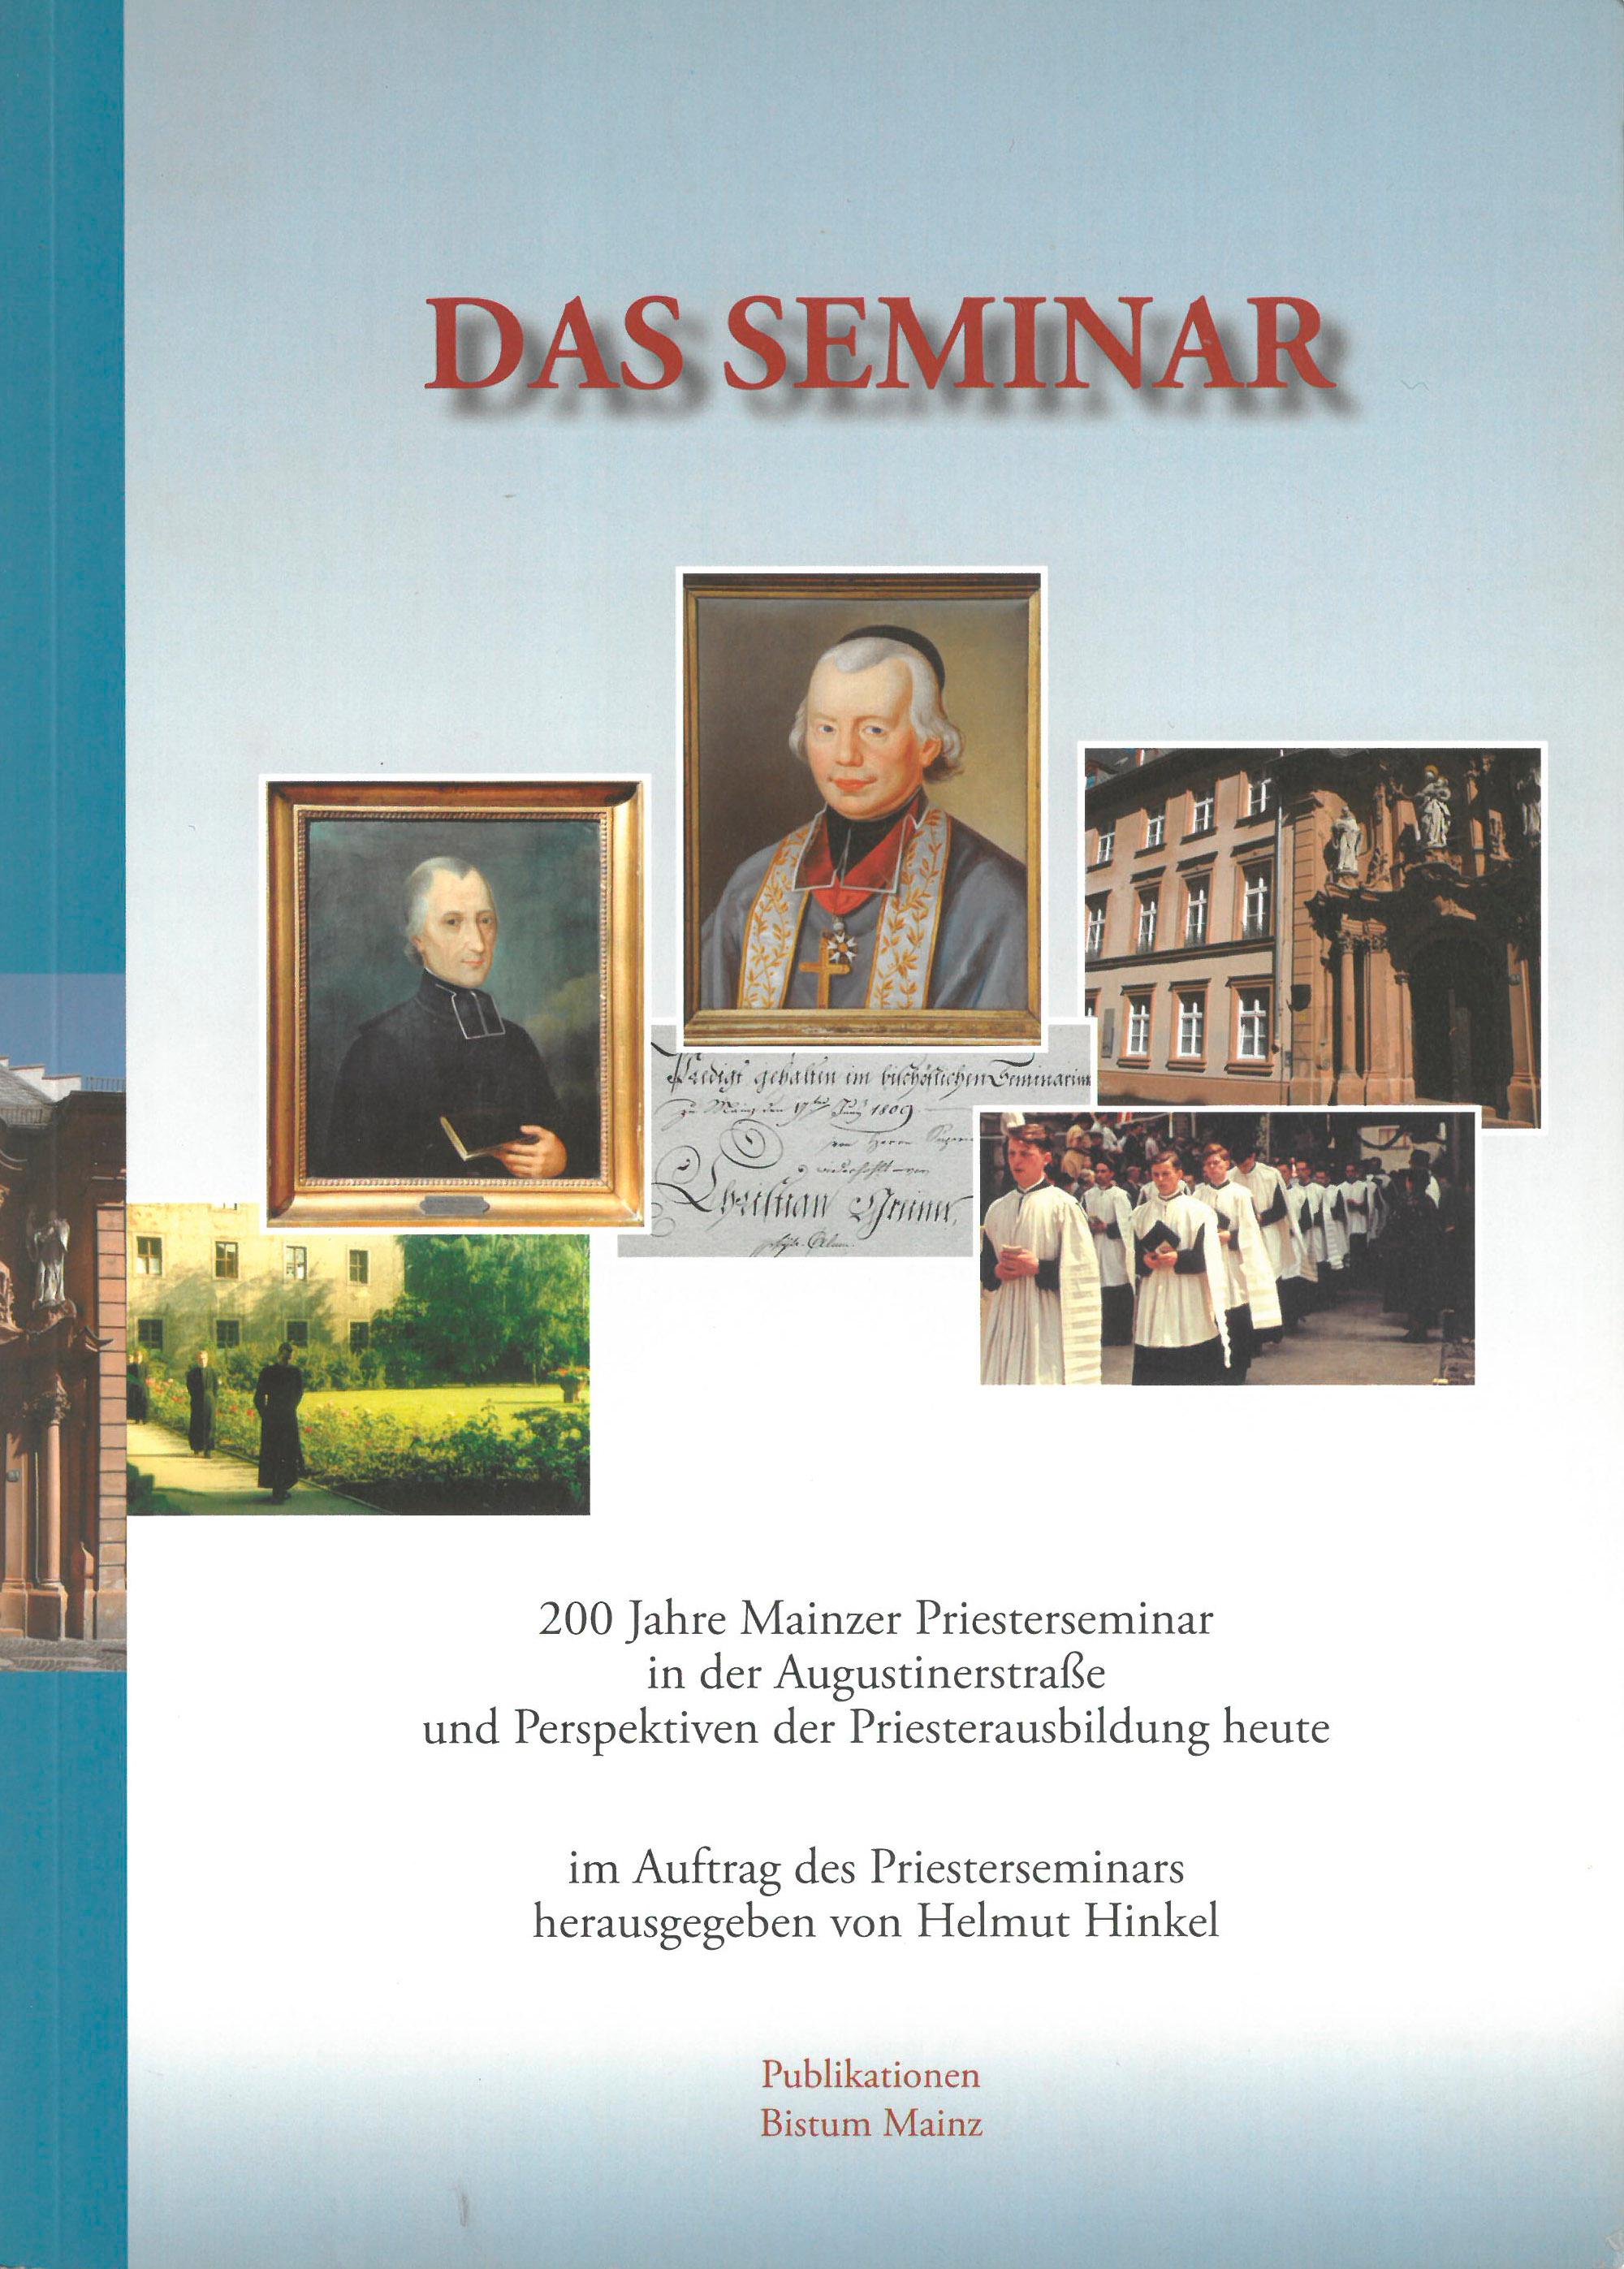 Mainzer Priesterseminar